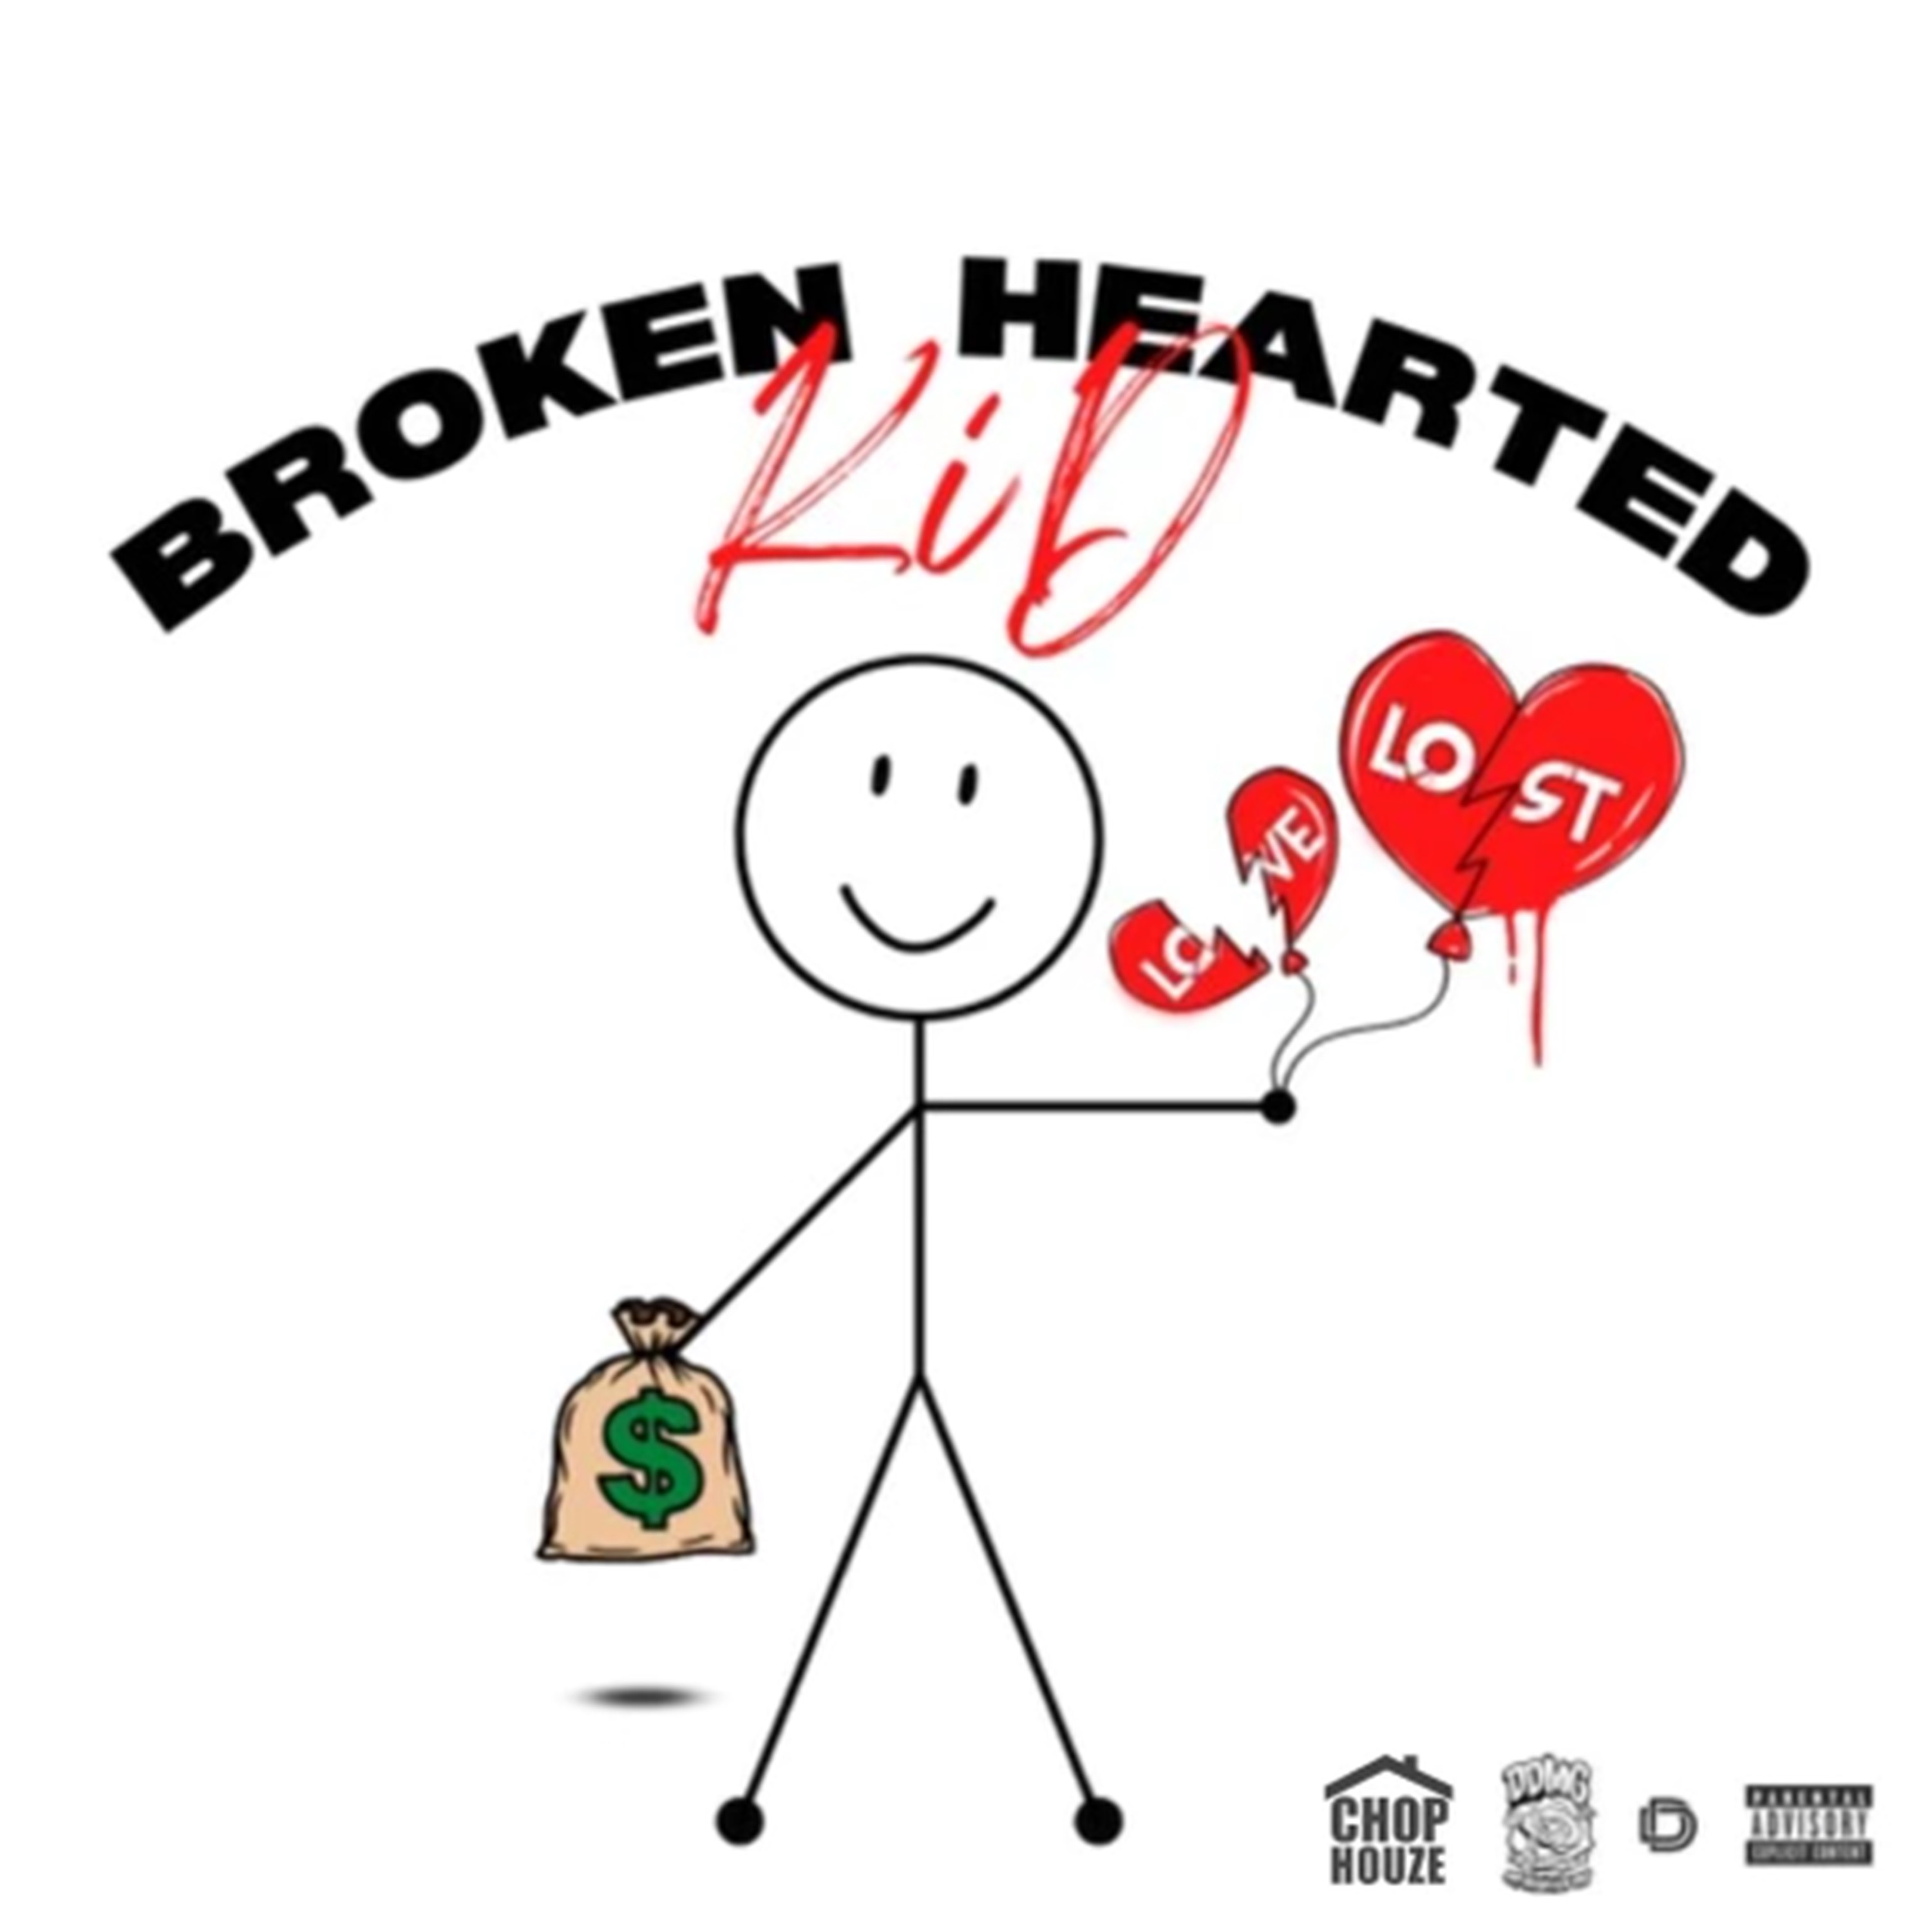 King VMA - Broken Hearted Kid Cover Art